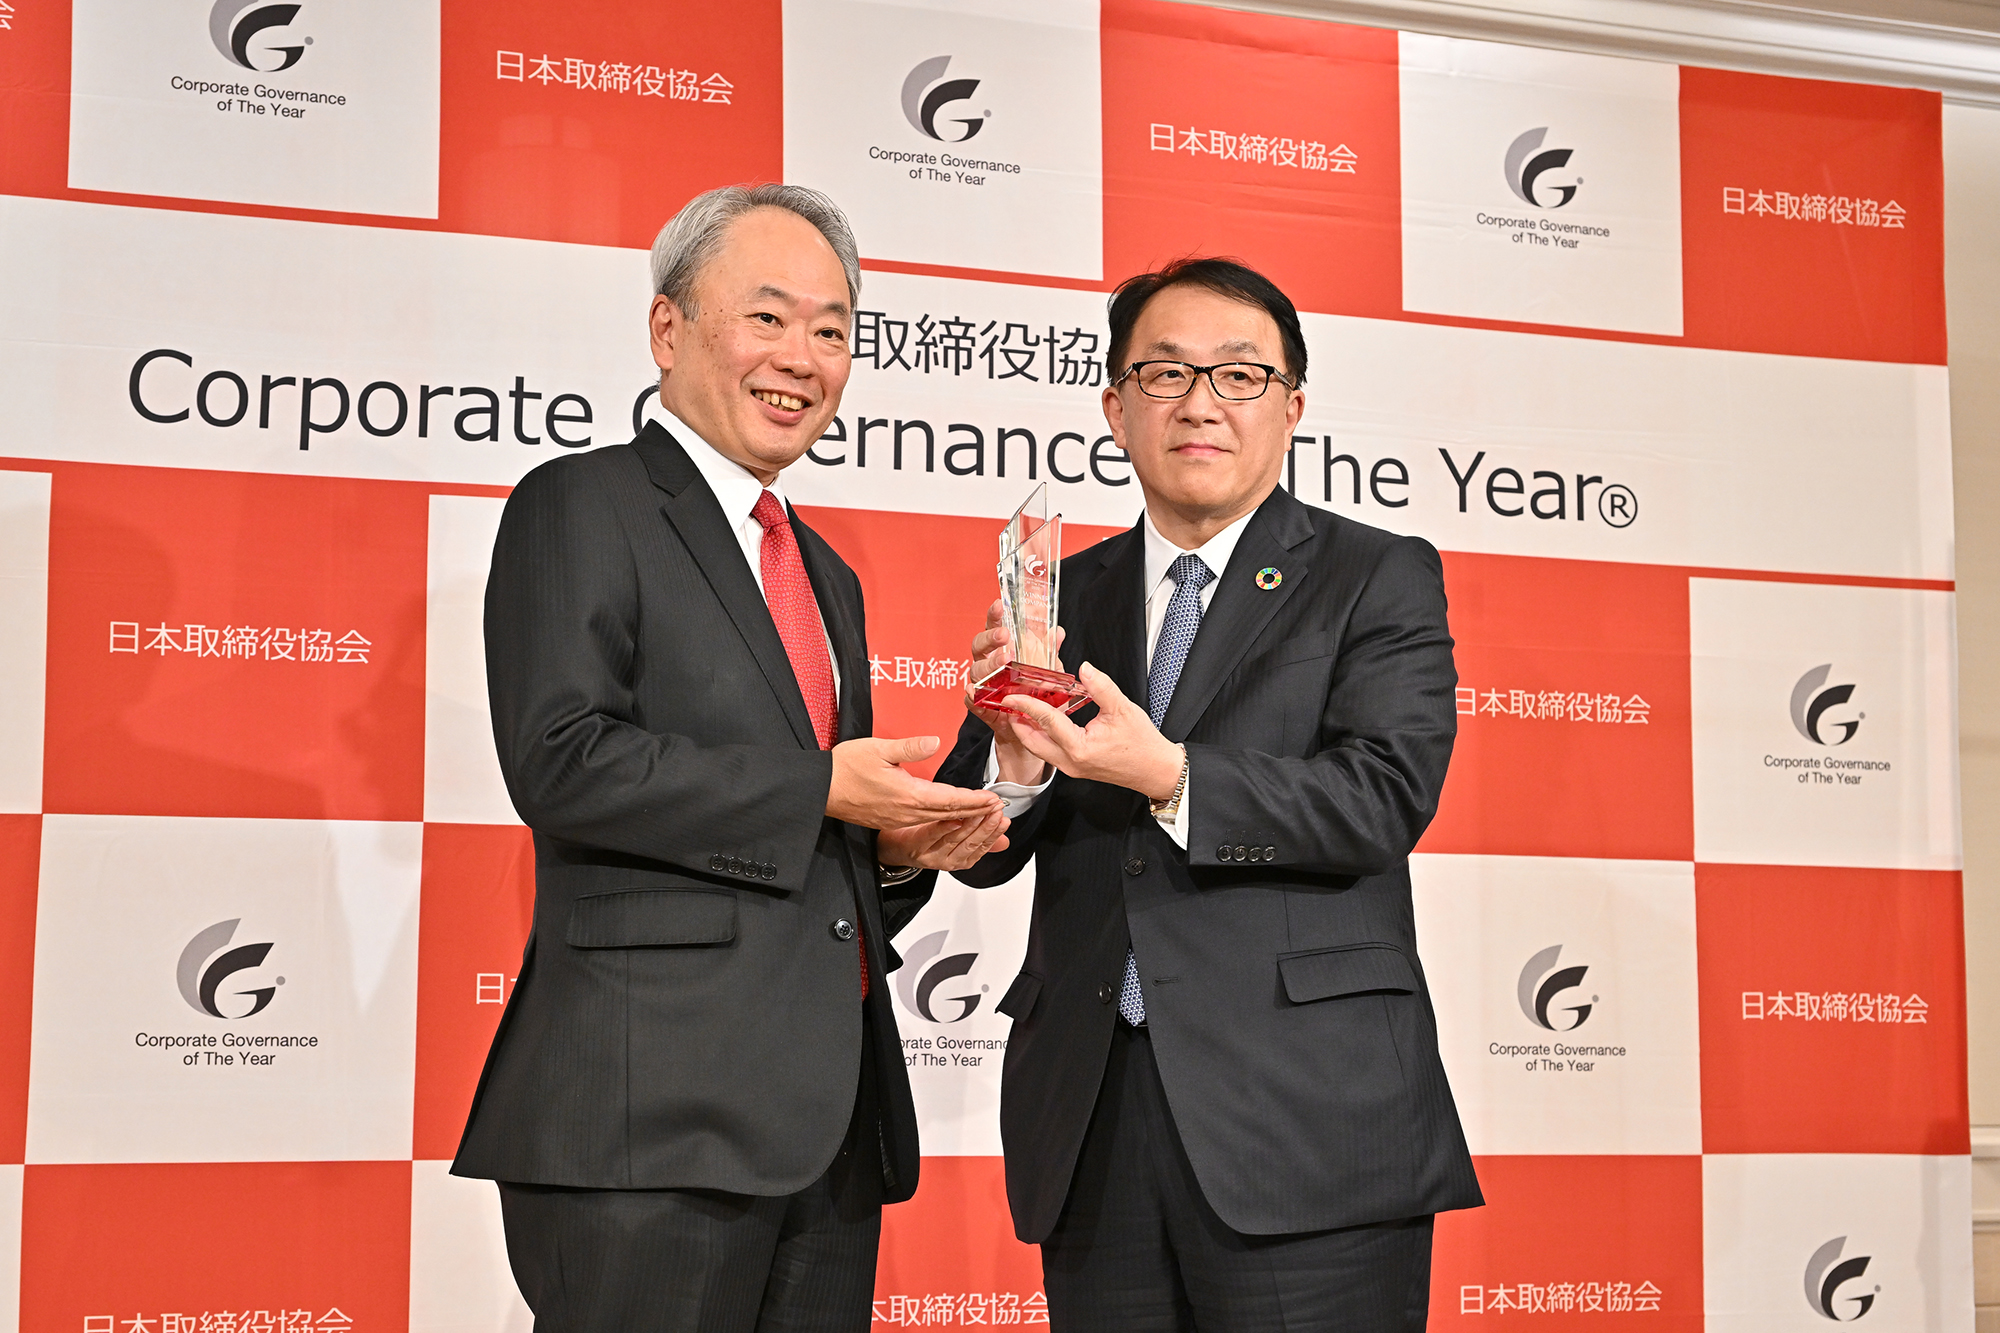 Mr. Shingo Konomoto, NRI Ltd. and Mr. Kazuhiko Toyama, JACD